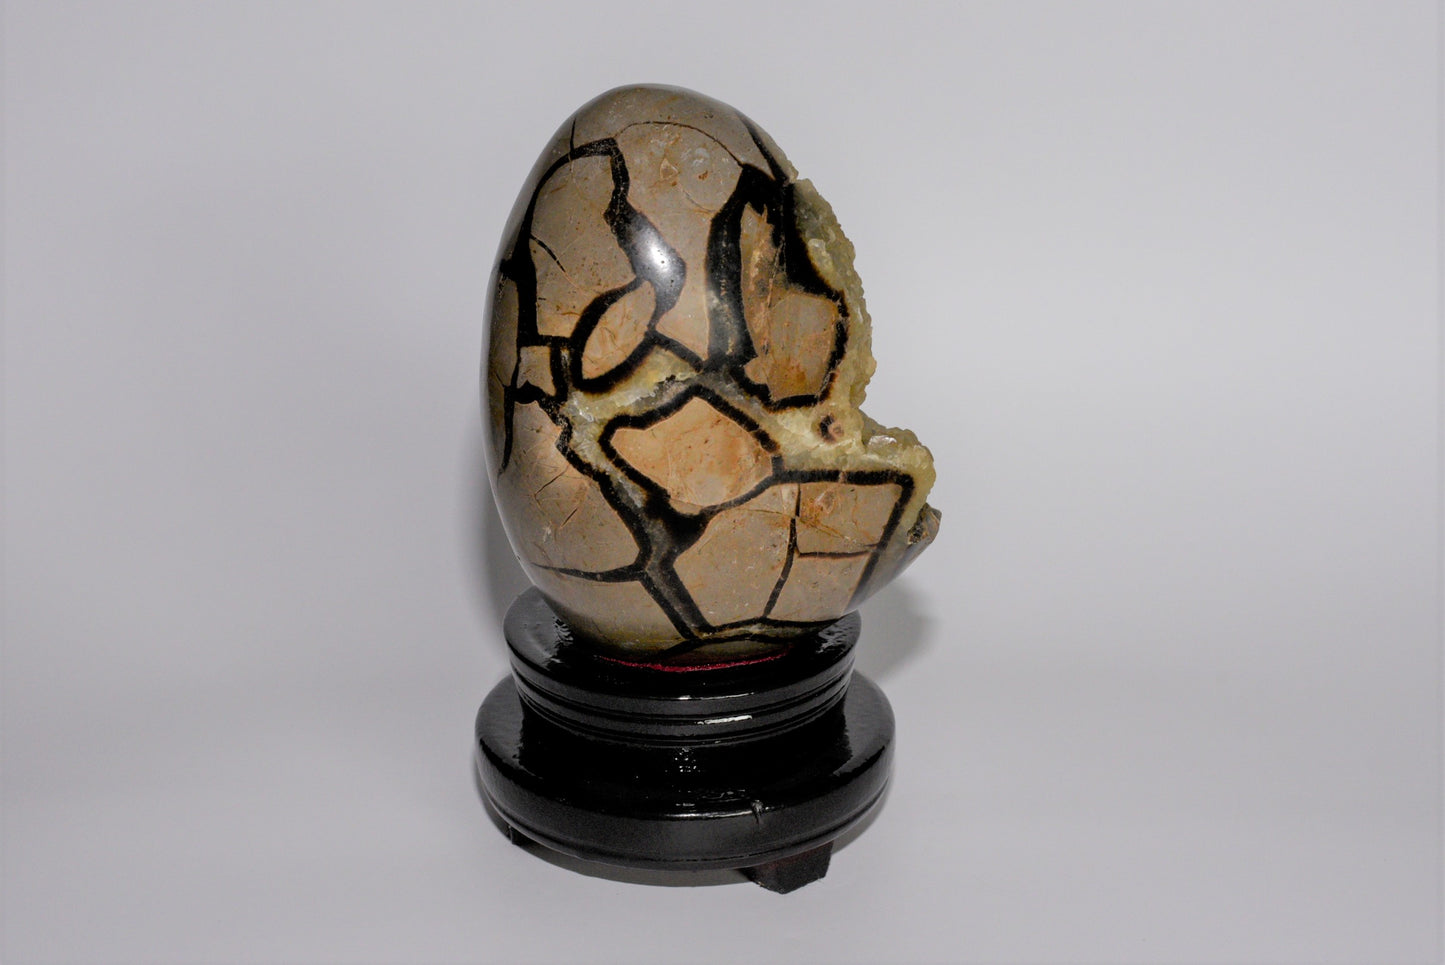 5.1" Polished, Multi-Colored Calcite Filled Septarian Geode "Egg" - Madagascar